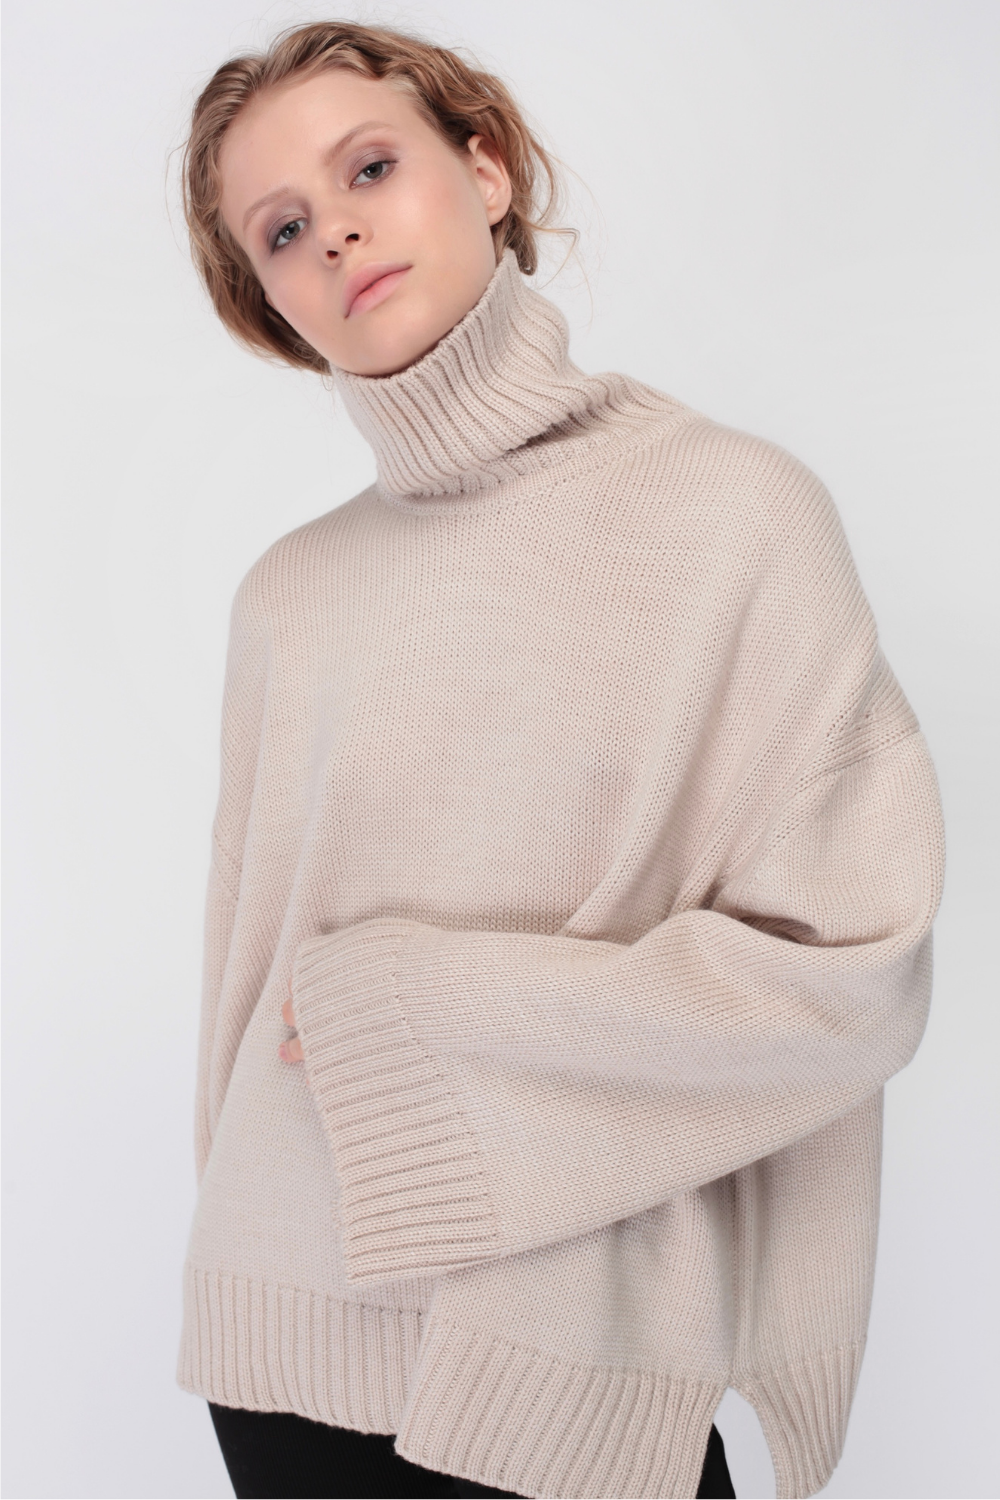 Volumetric sweater with neckline and cuts (Miss Secret) PU-015